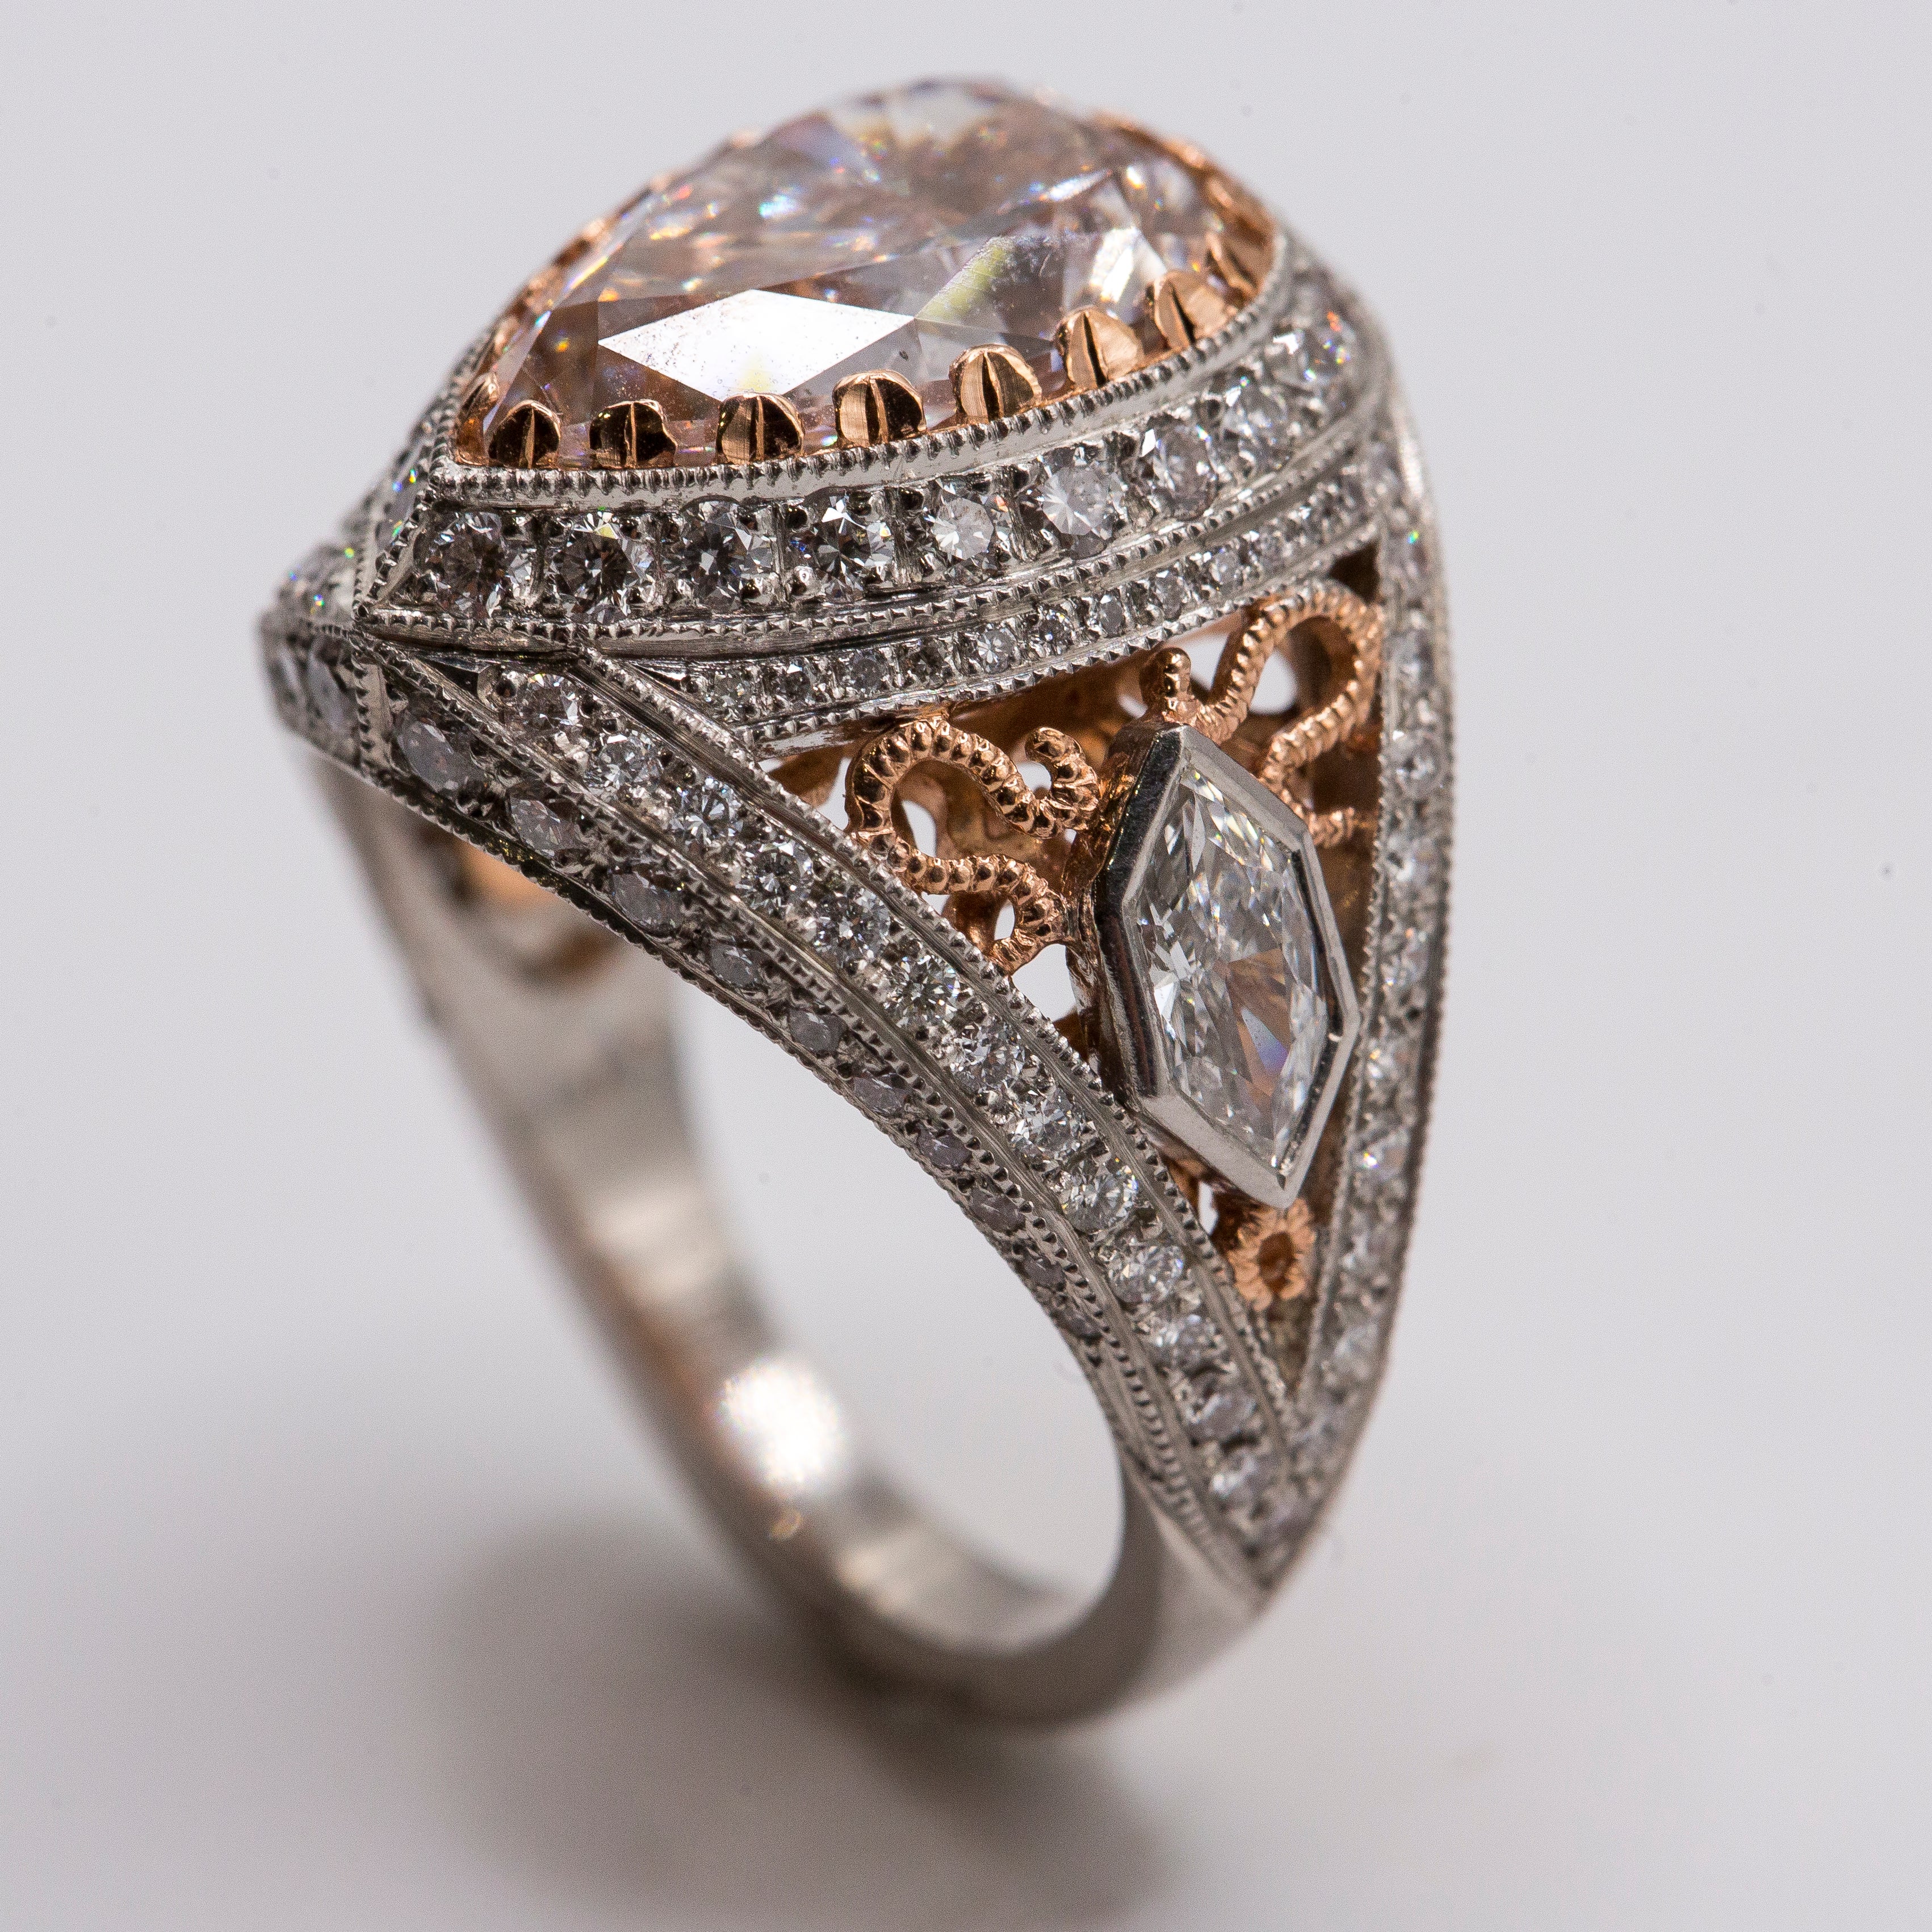 3.60 Carat GIA Cert Pink Diamond/Platinum/18k. Ring by Anthony Gerard DiMaggio